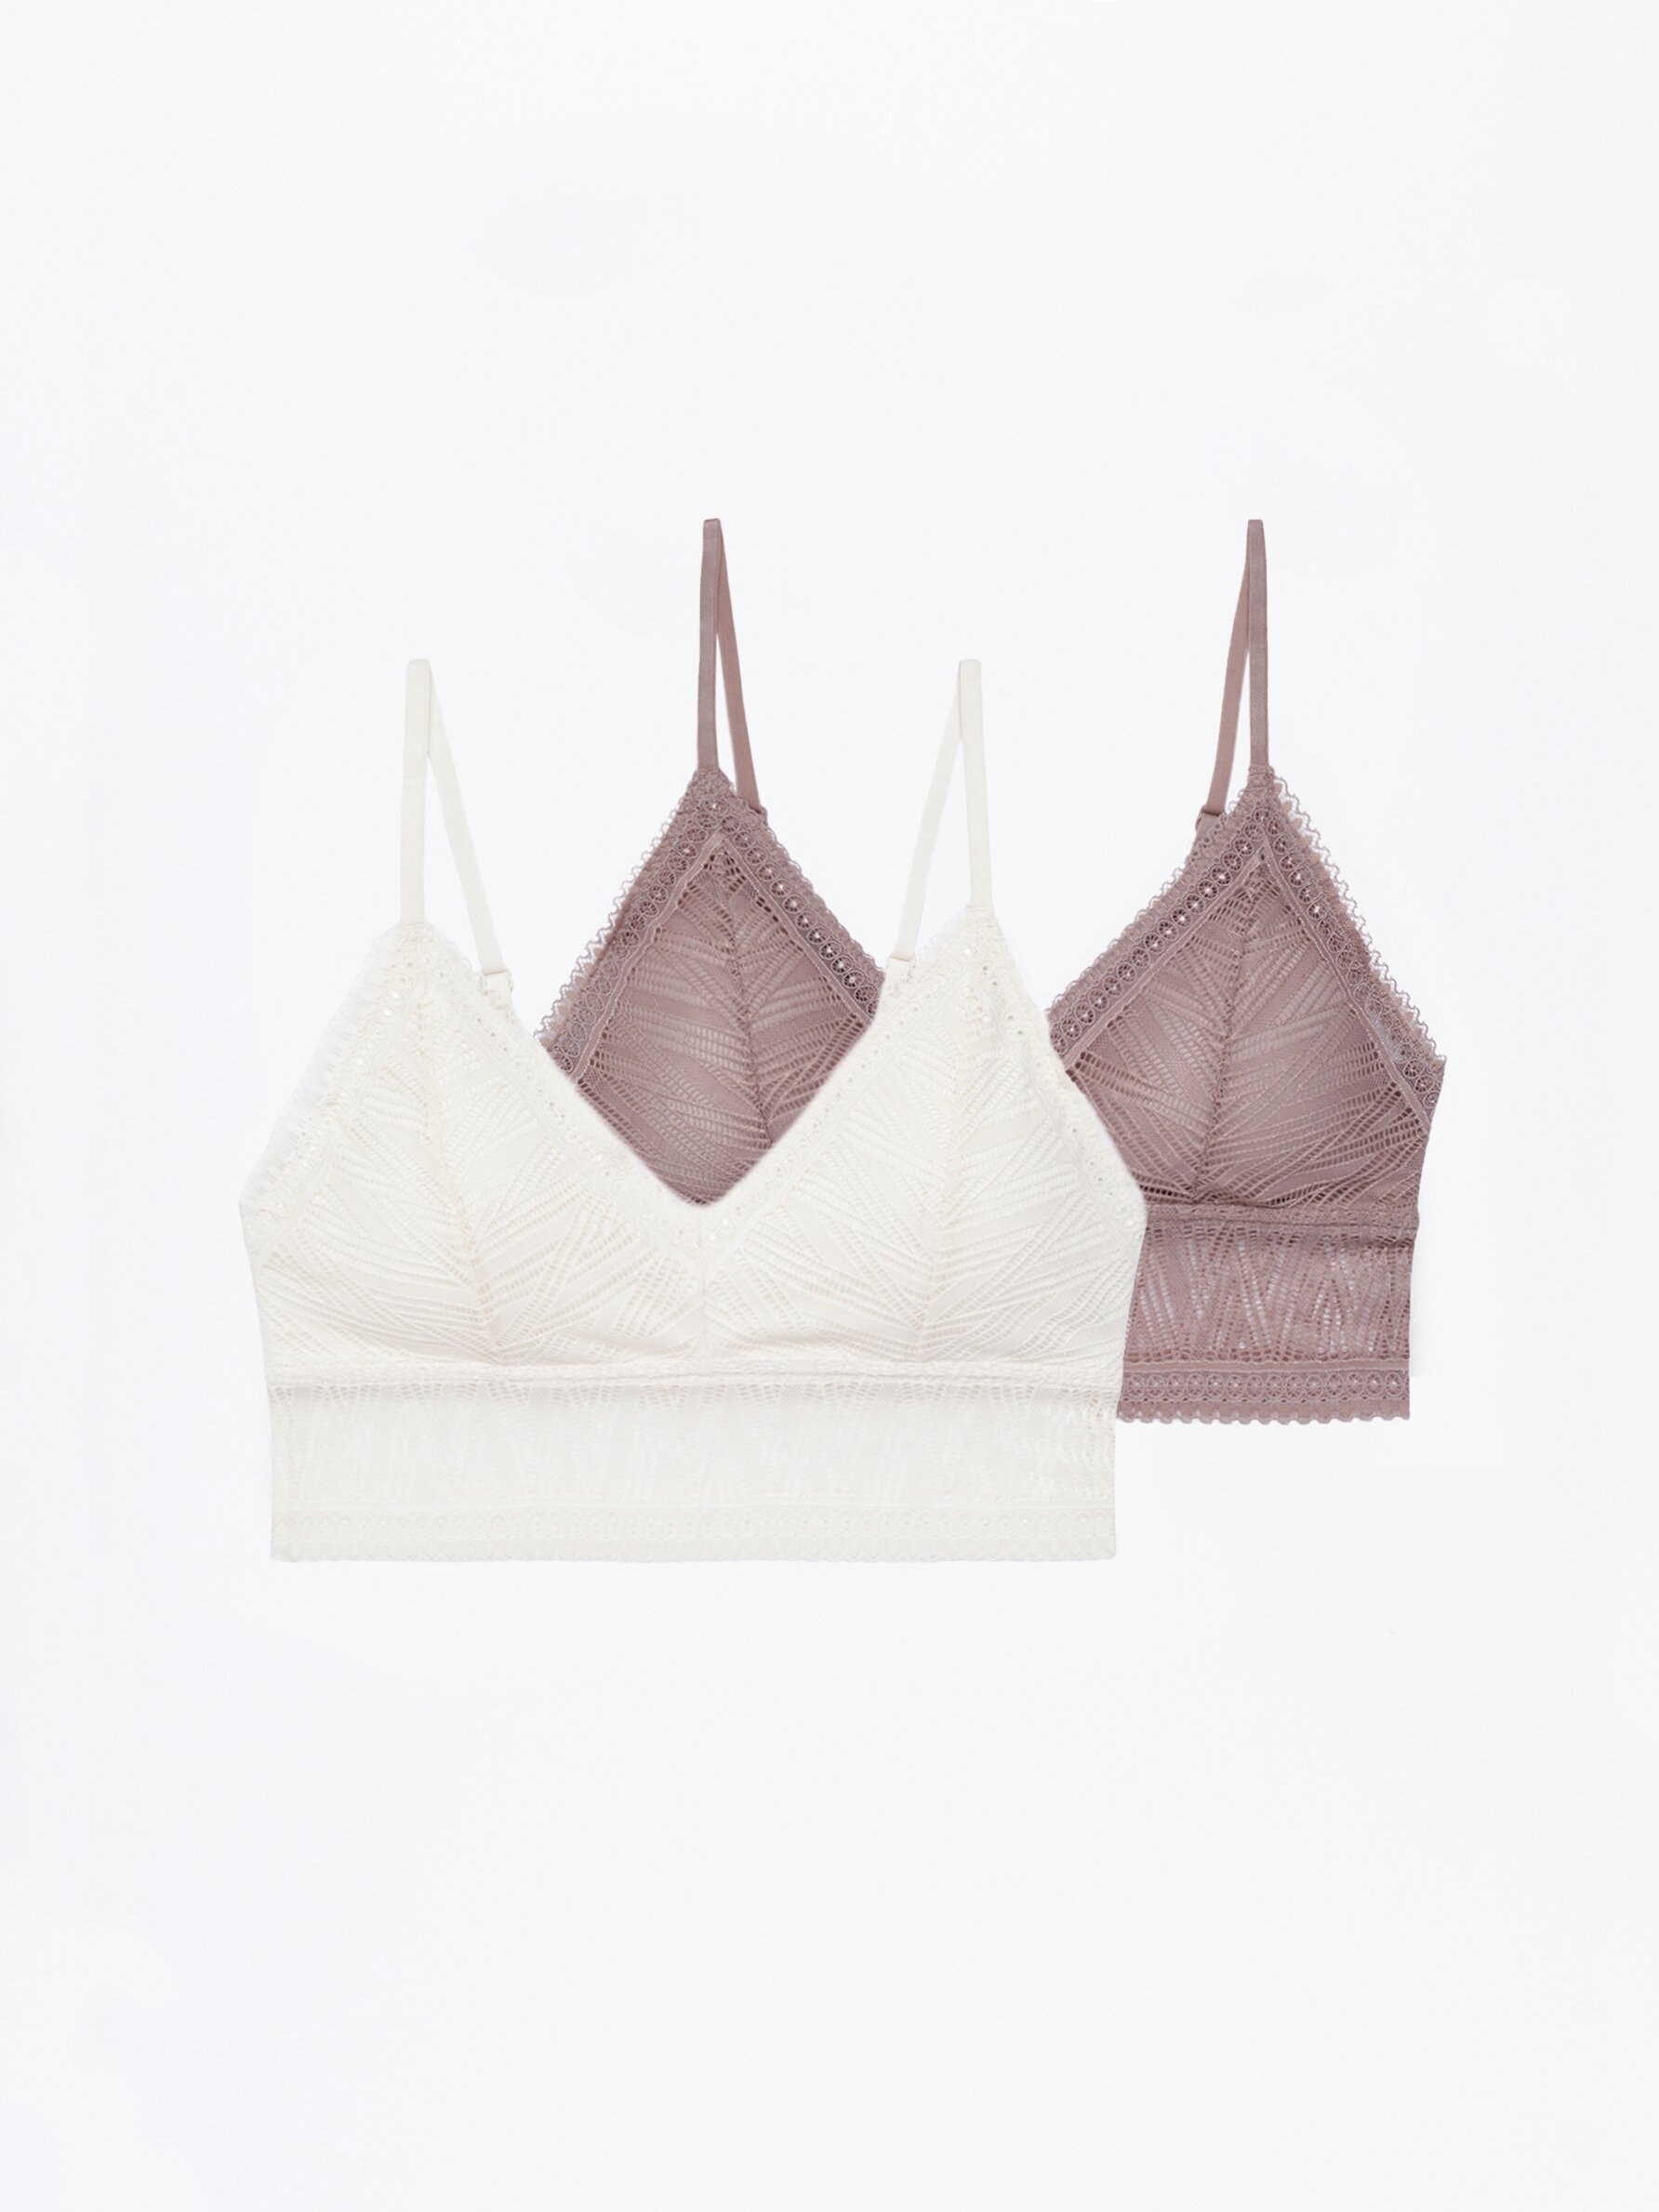 Pack of 2 lace bras - No underwire - Bras - Underwear - CLOTHING